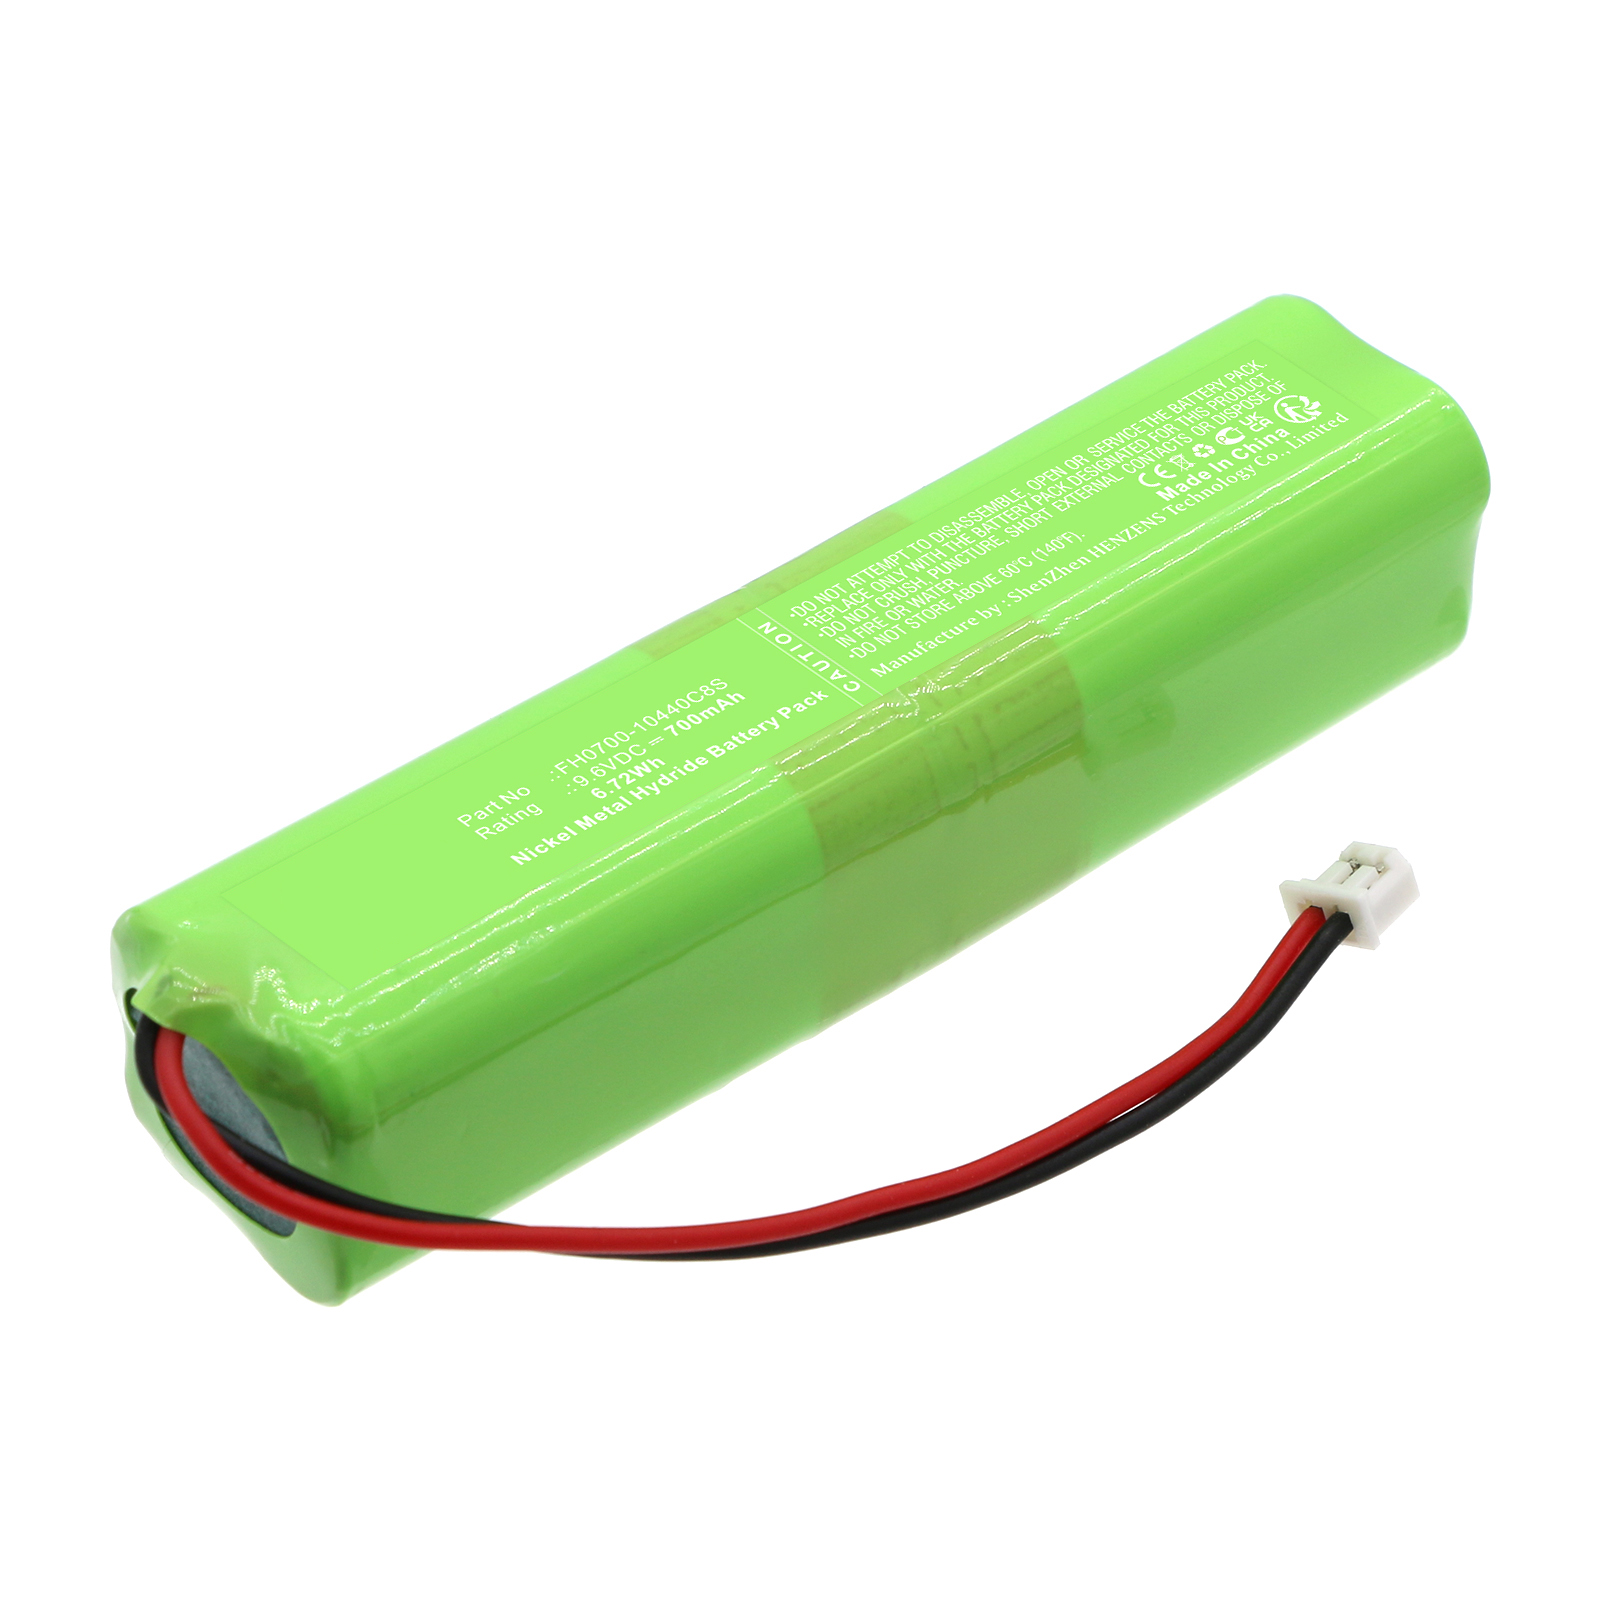 Batteries for LifeSOSAlarm System